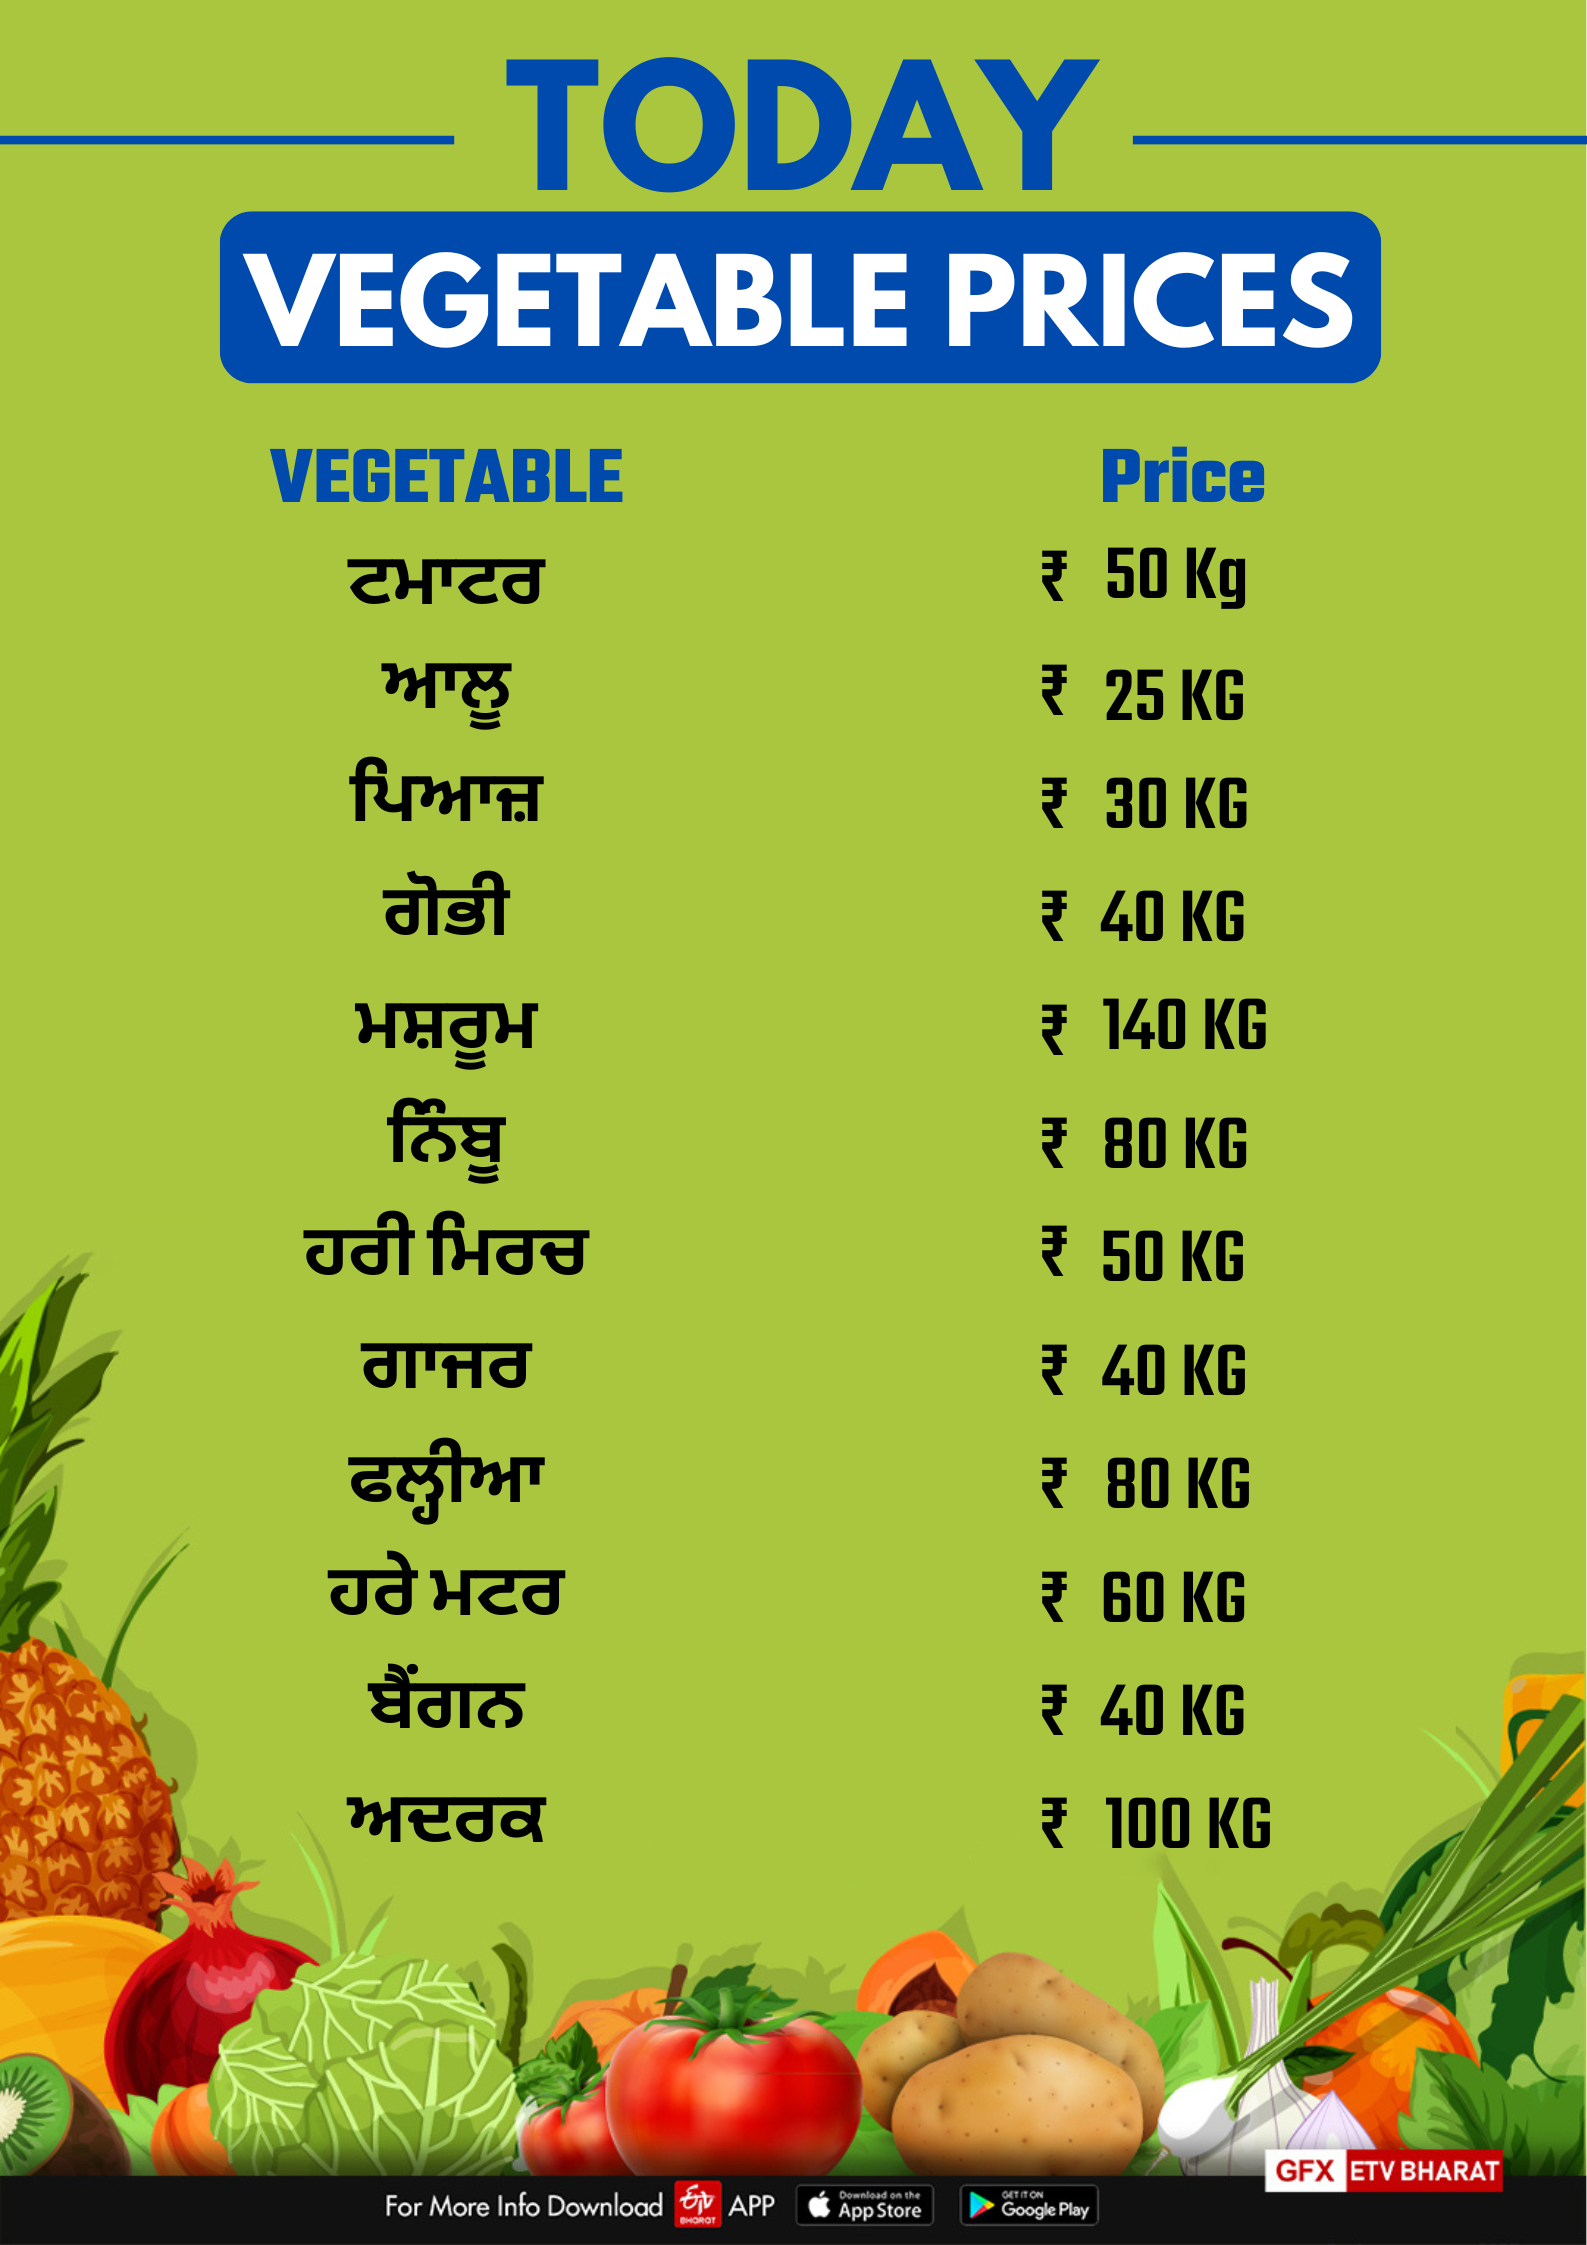 Vegetable rates in Punjab on December 1